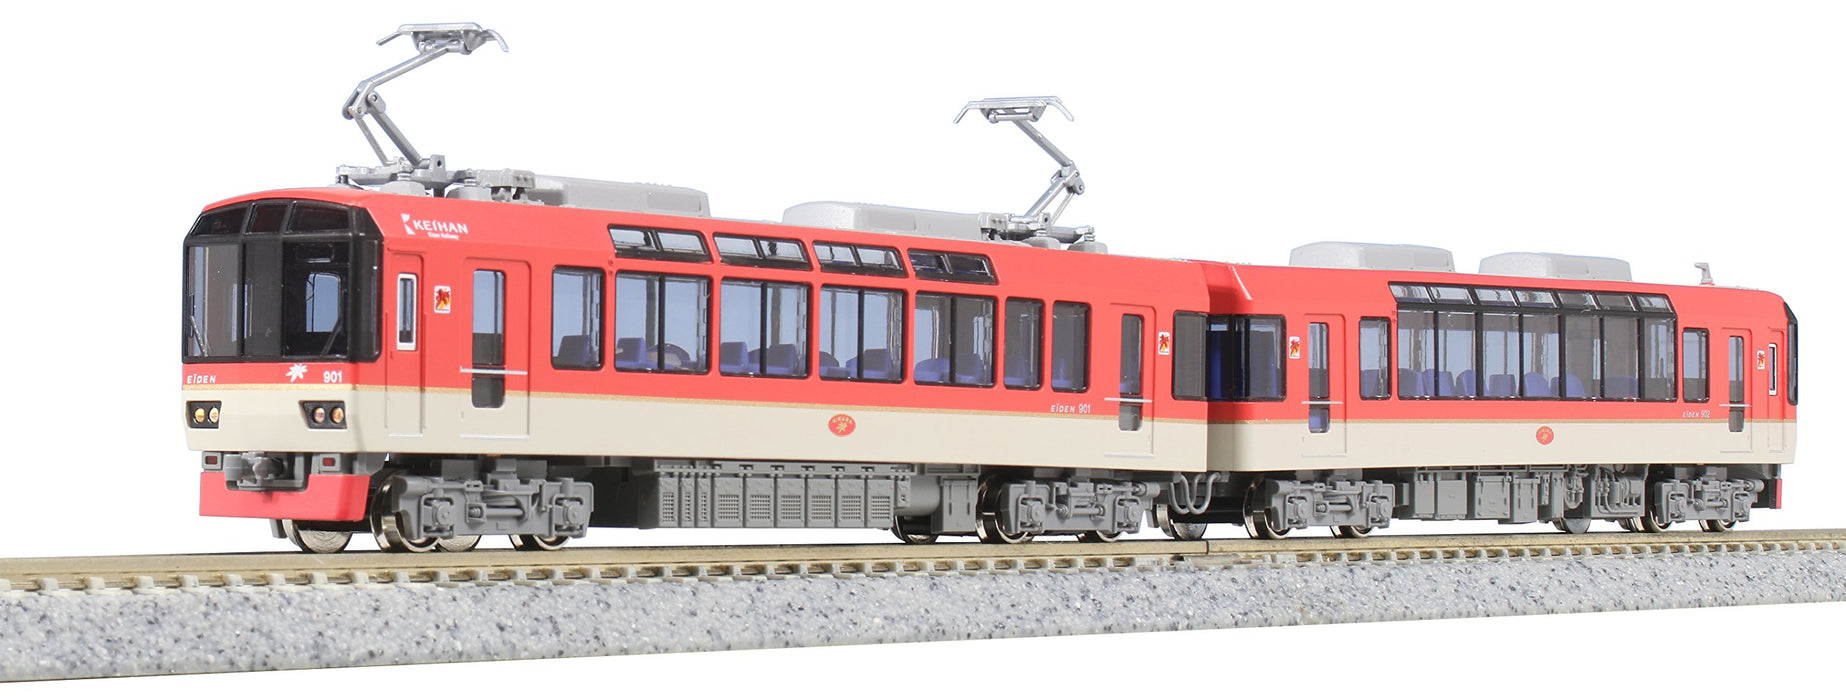 Train miniature rouge Kato Kirara - Voie N Eizan Electric Railway série 900